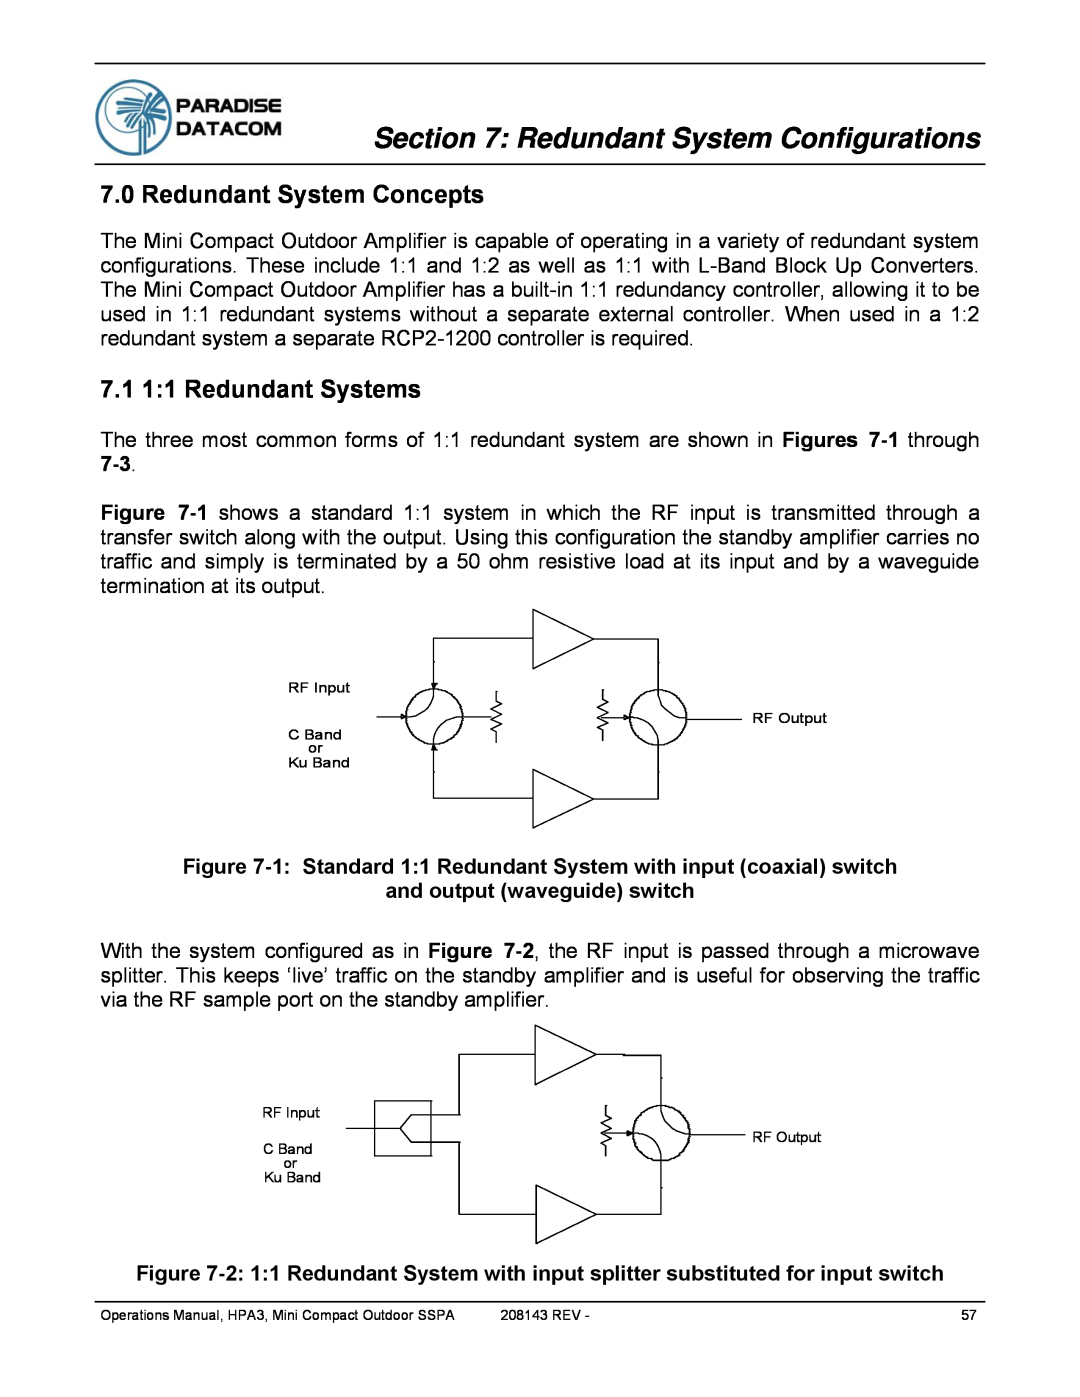 Paradise RA 5785 manual Redundant System Configurations, Redundant System Concepts, 7.1 1 1 Redundant Systems 